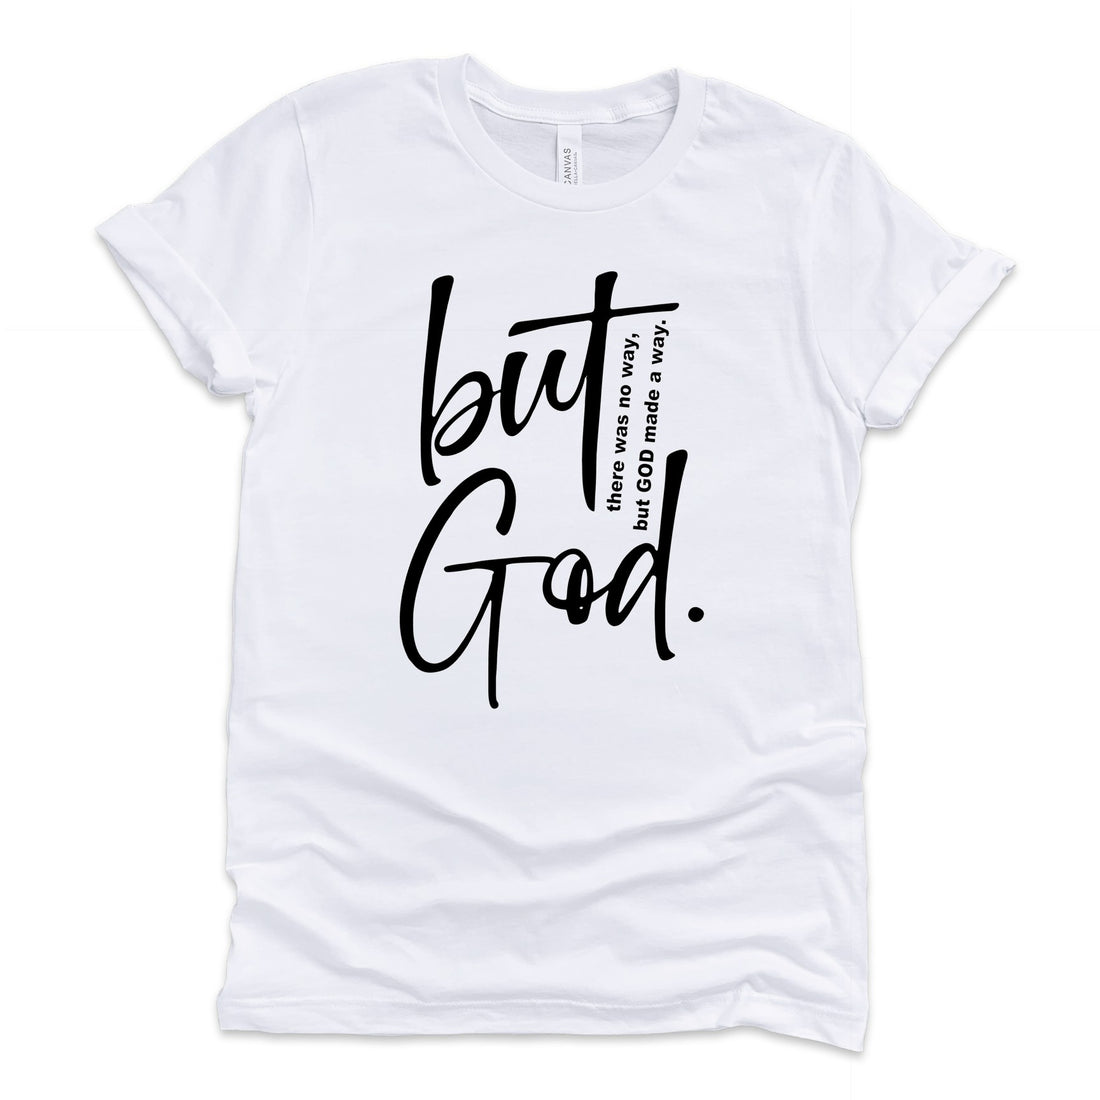 Profyle District - But God - T-Shirts - Whtie